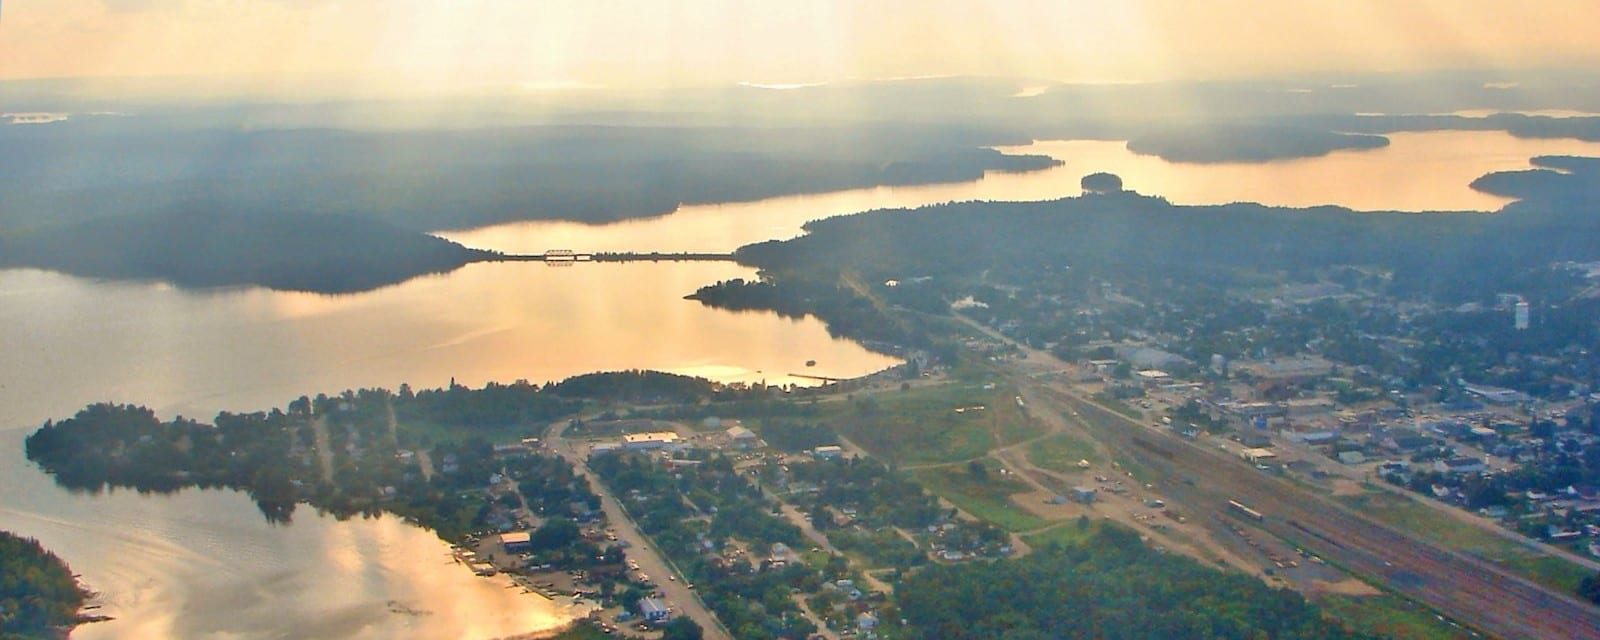 Abram Lake, Ontario, Canada